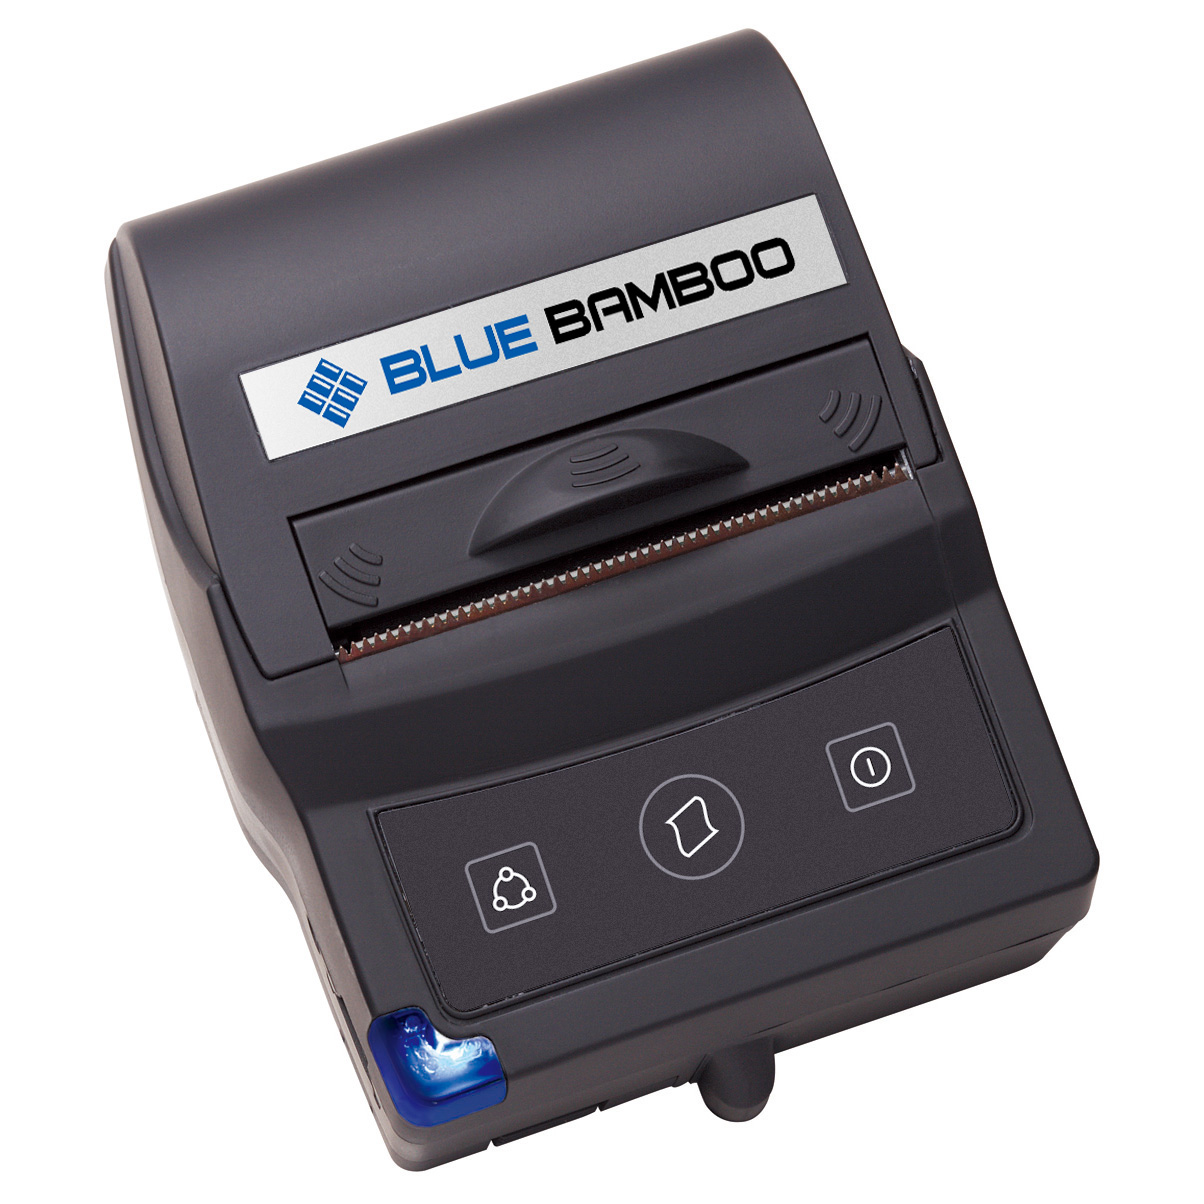 Printer-Bluetooth-Bluebambo-P25i-Kiswara.co.id-1510060203080.jpg